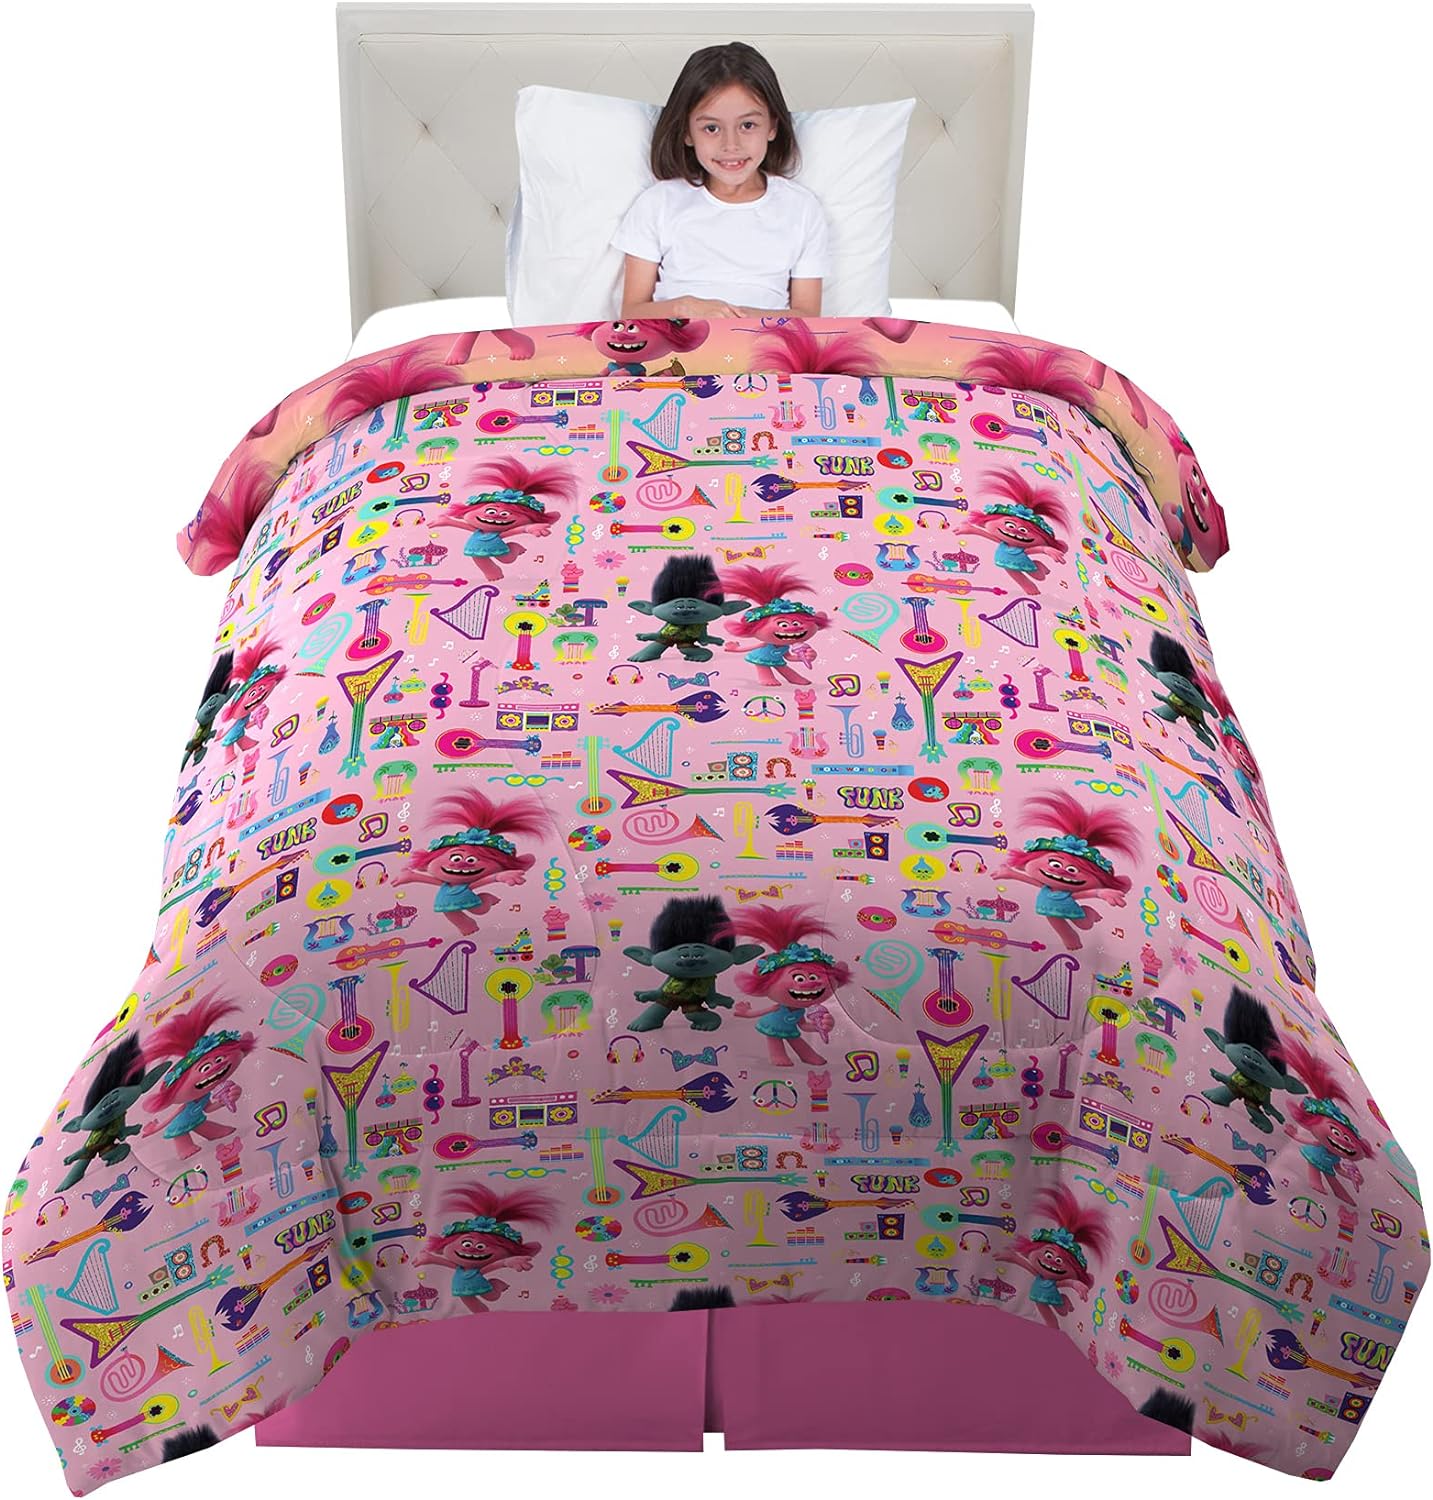 NEW Franco Kids Bedding Soft Microfiber Comforter, Twin, Trolls World Tour - Retail $51